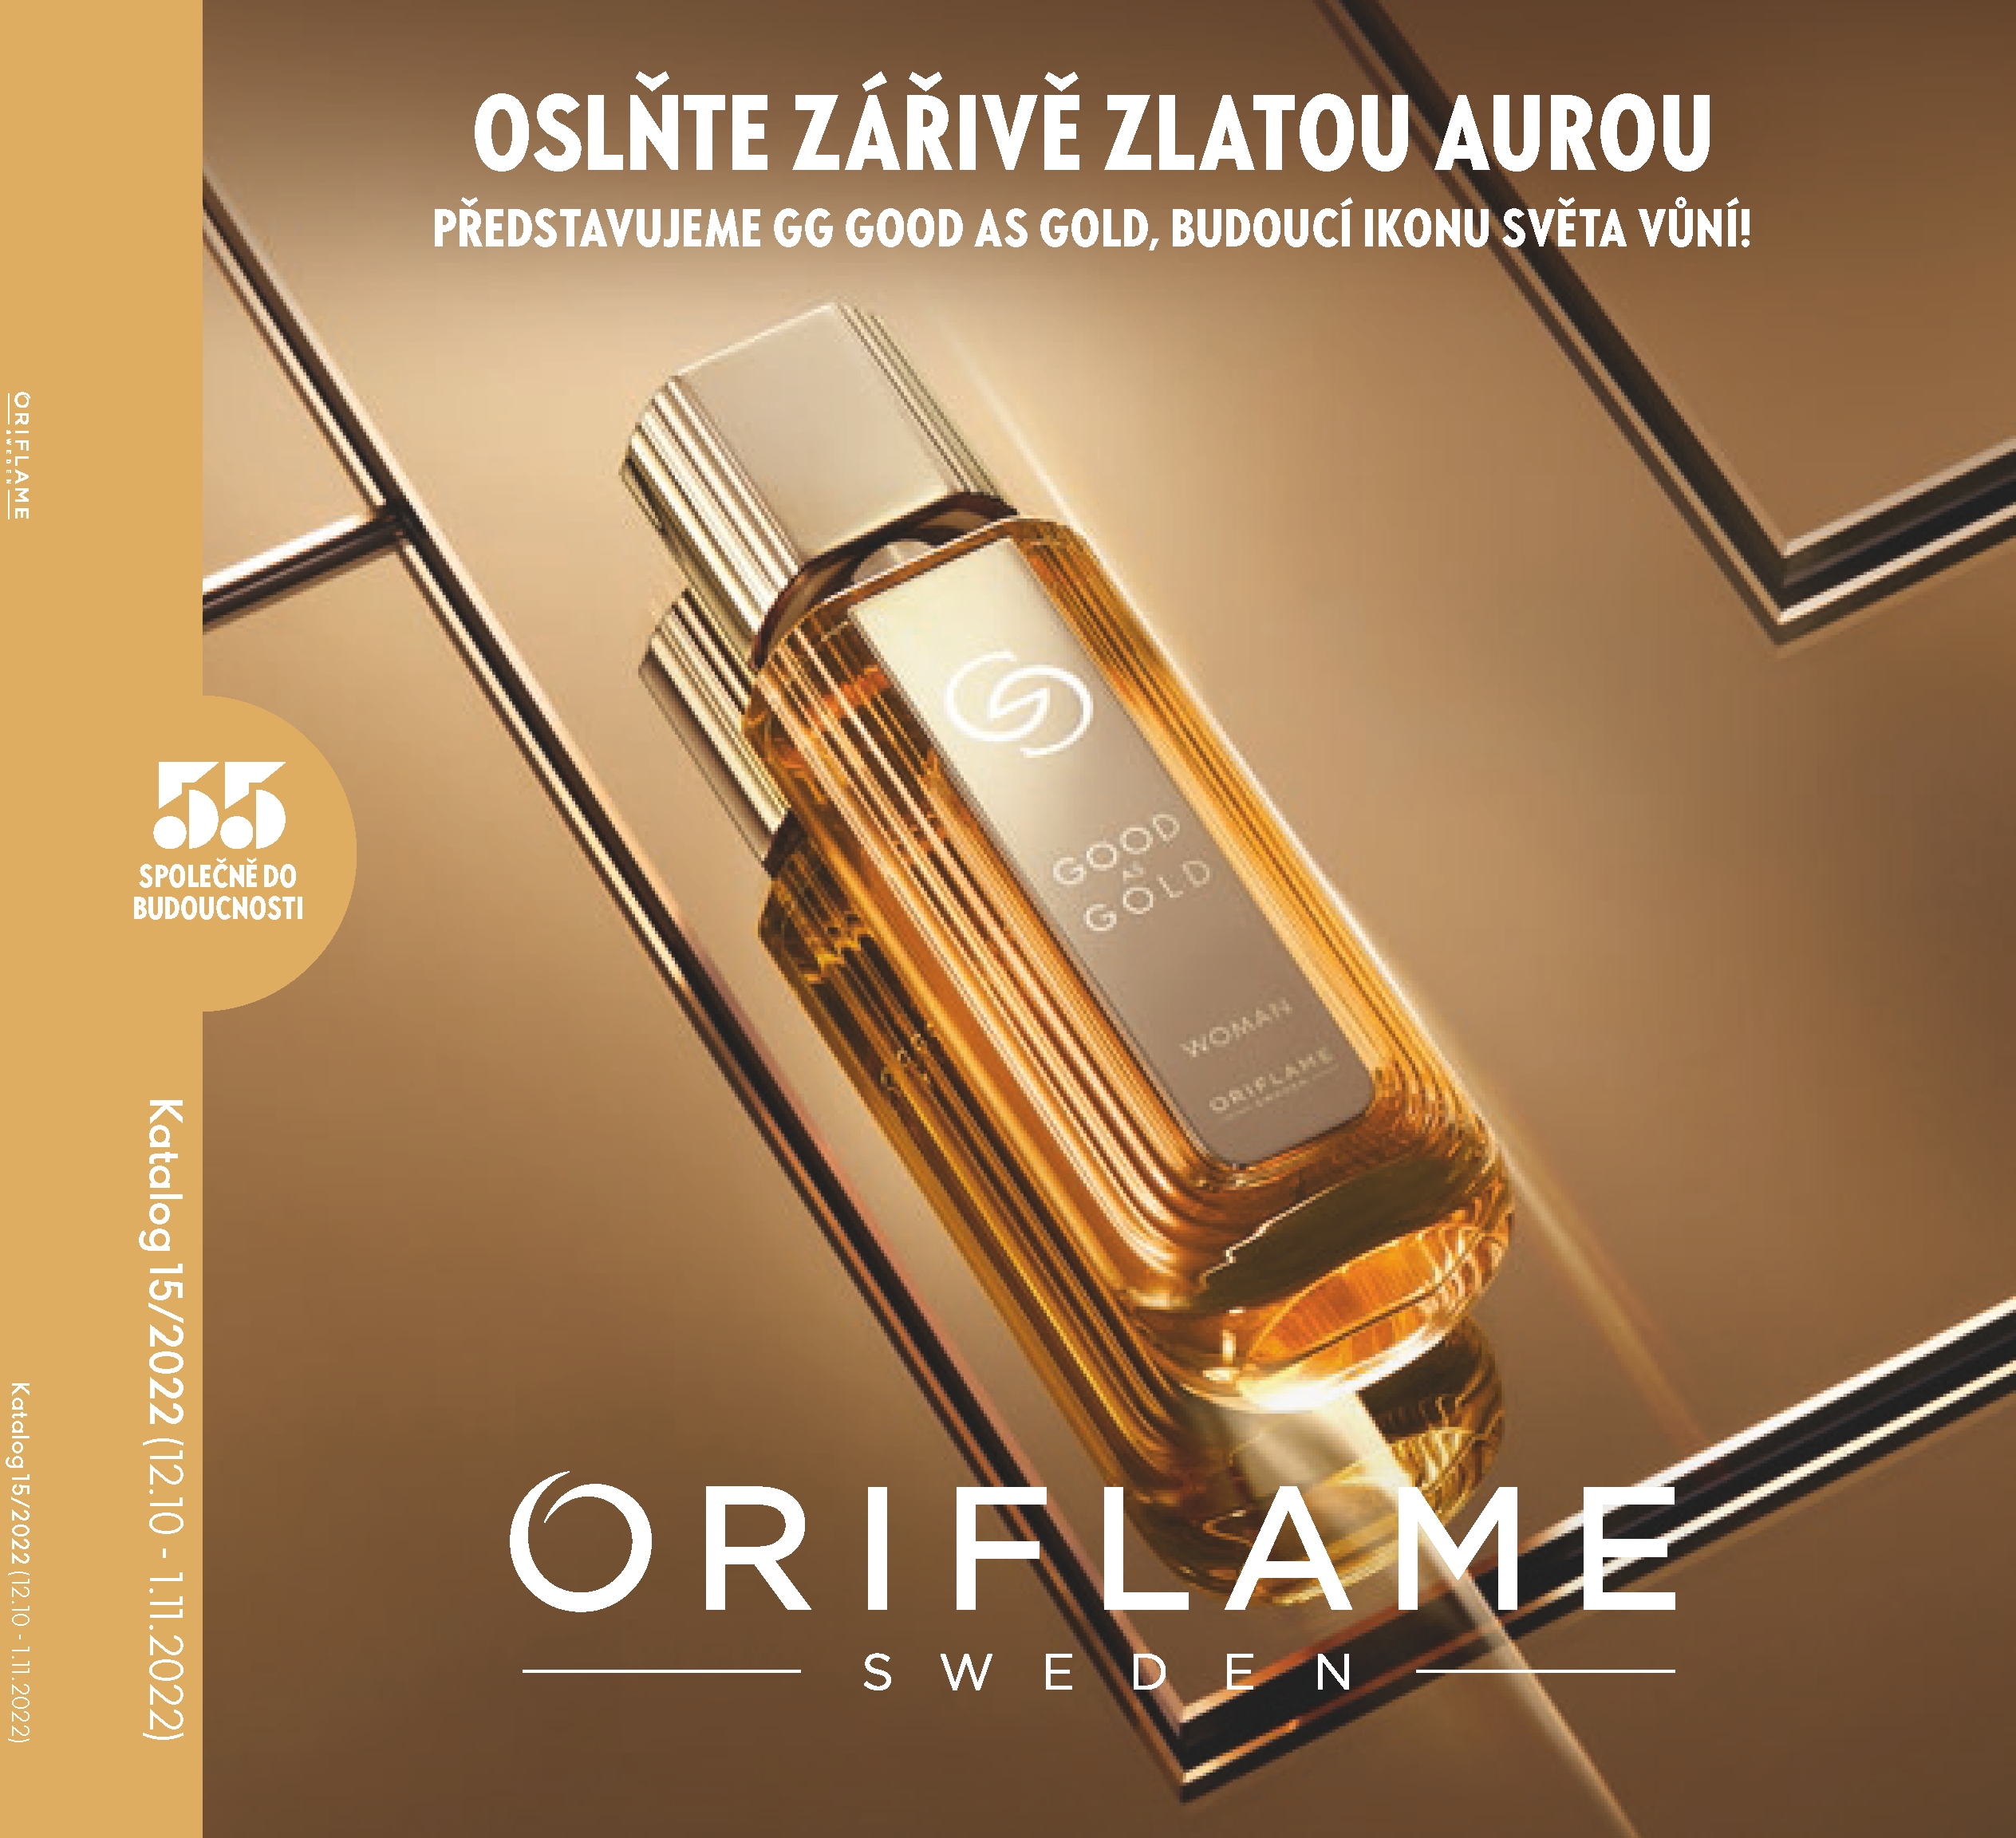 Oriflame katalog 15 oriflame.cz www.oriflame.cz